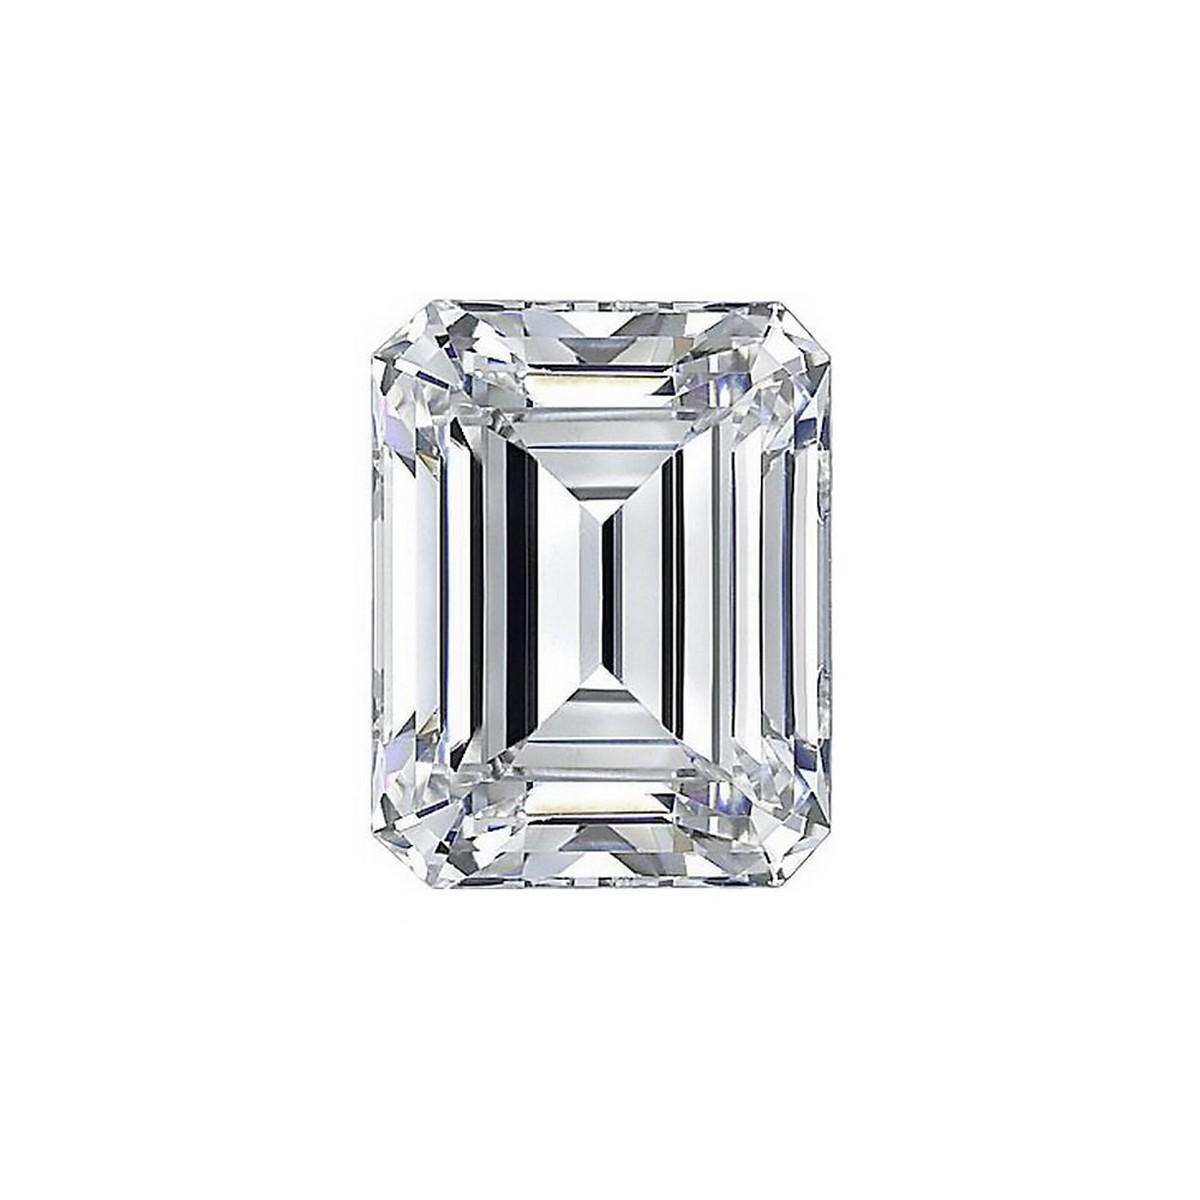 1.93 ctw. VS2 IGI Certified Emerald Cut Loose Diamond (LAB GROWN)